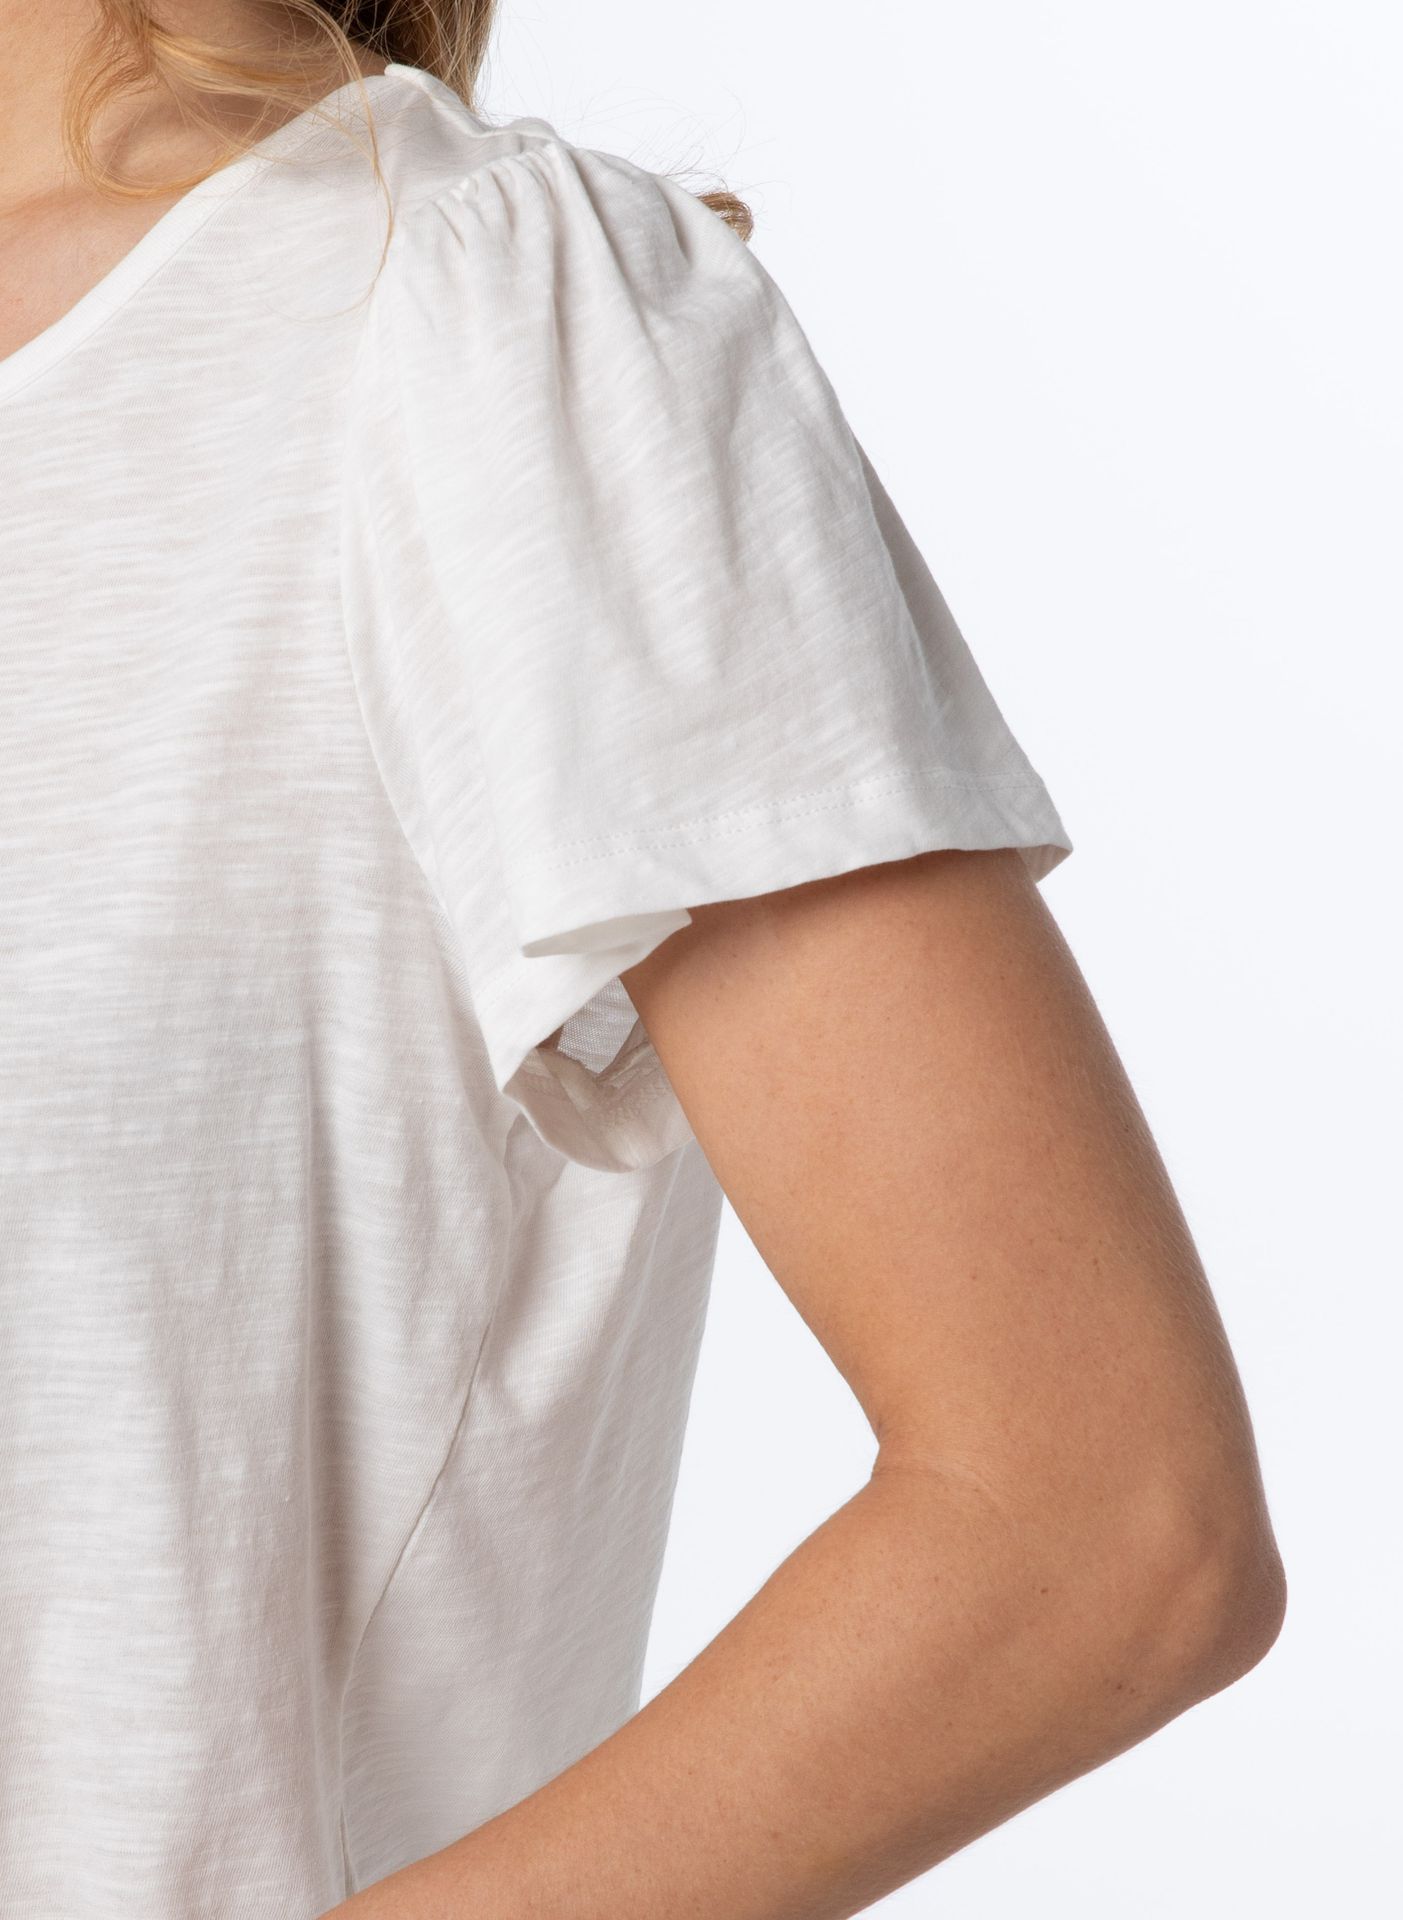 Norah Shirt wit gemêleerd  off-white 212572-101